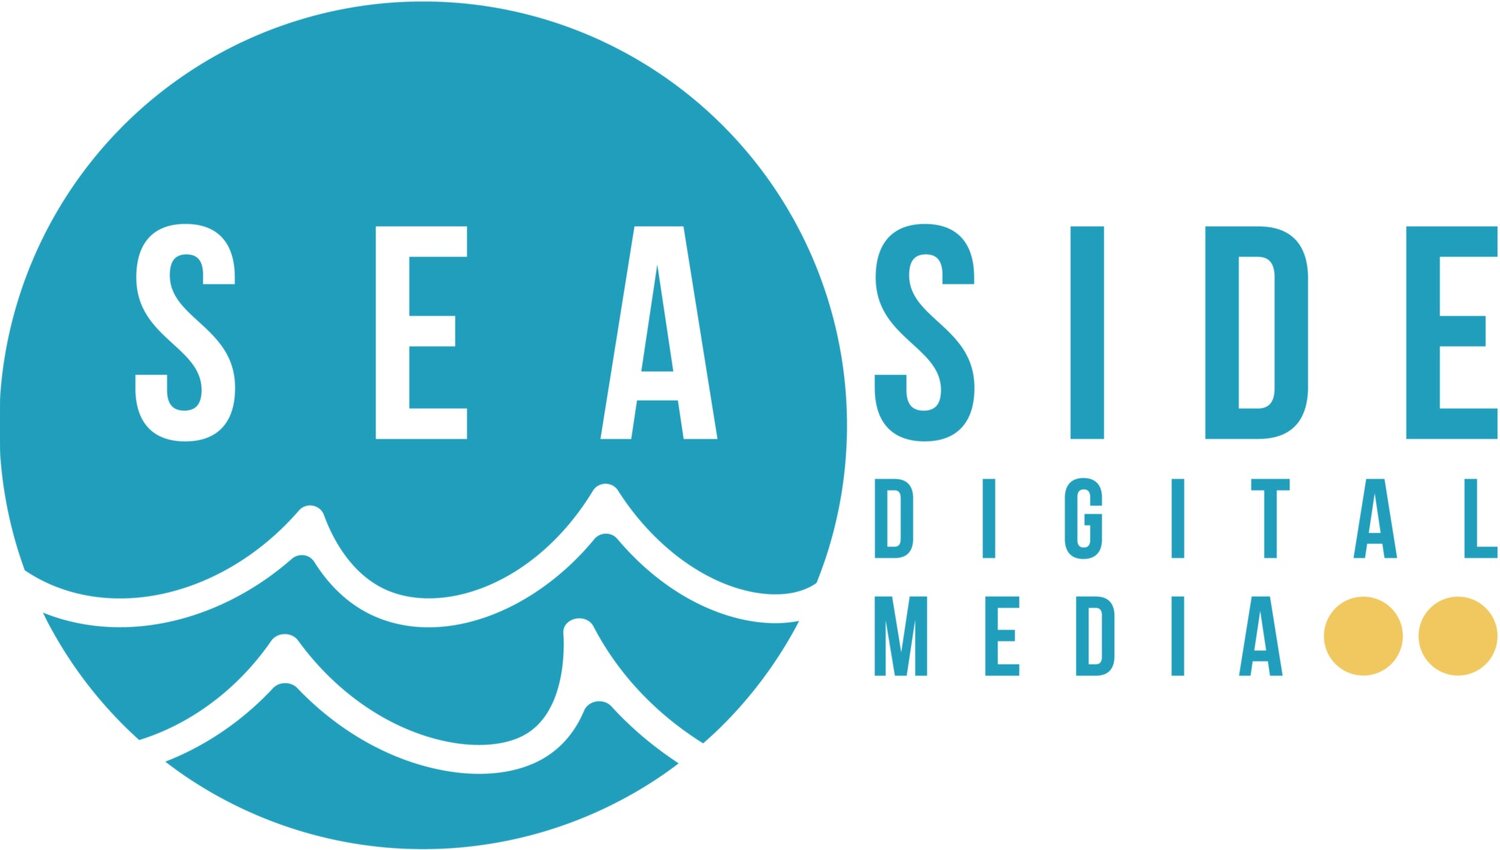 Seaside Digital Media